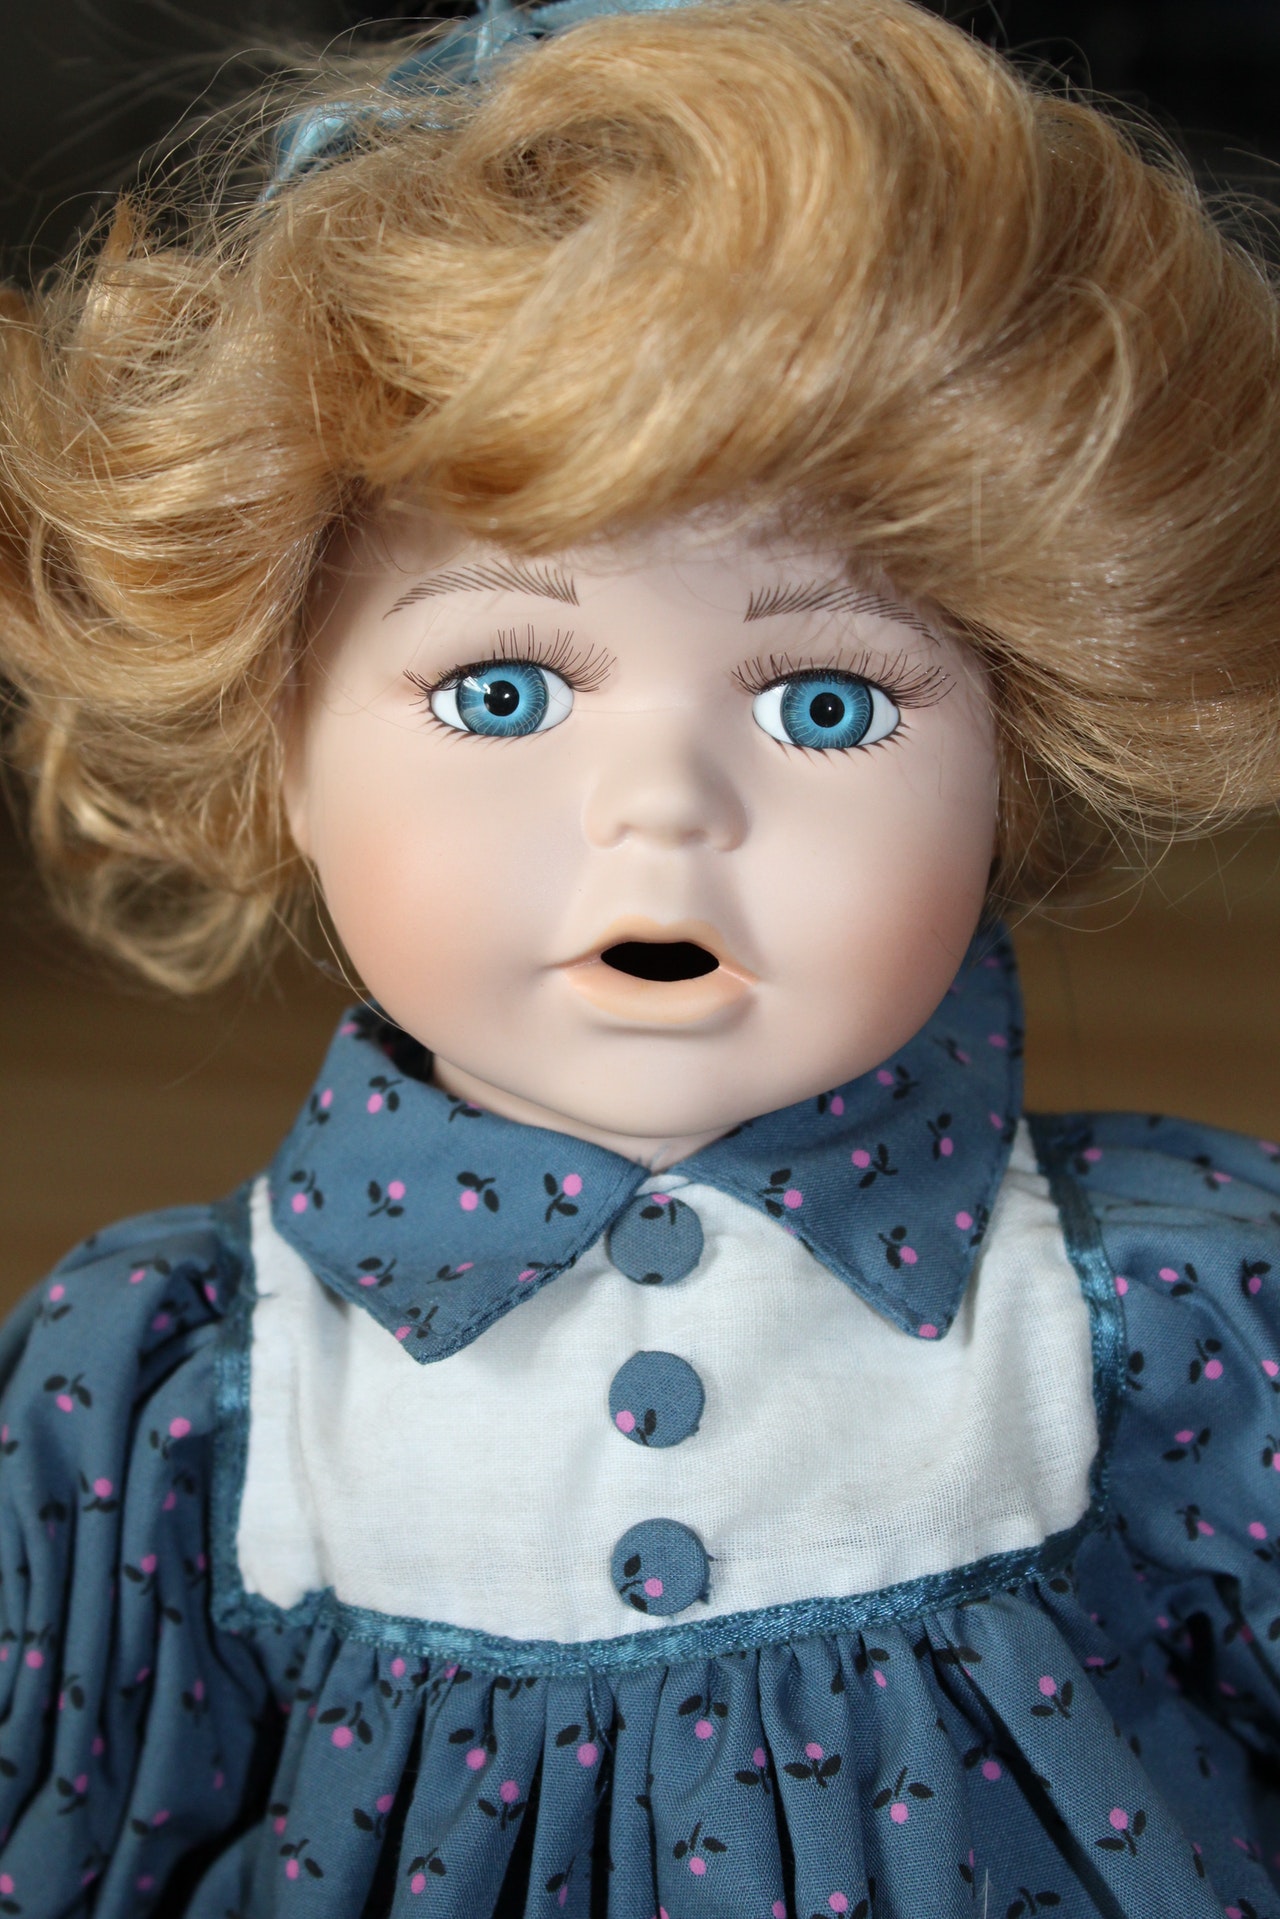 creepy american girl dolls